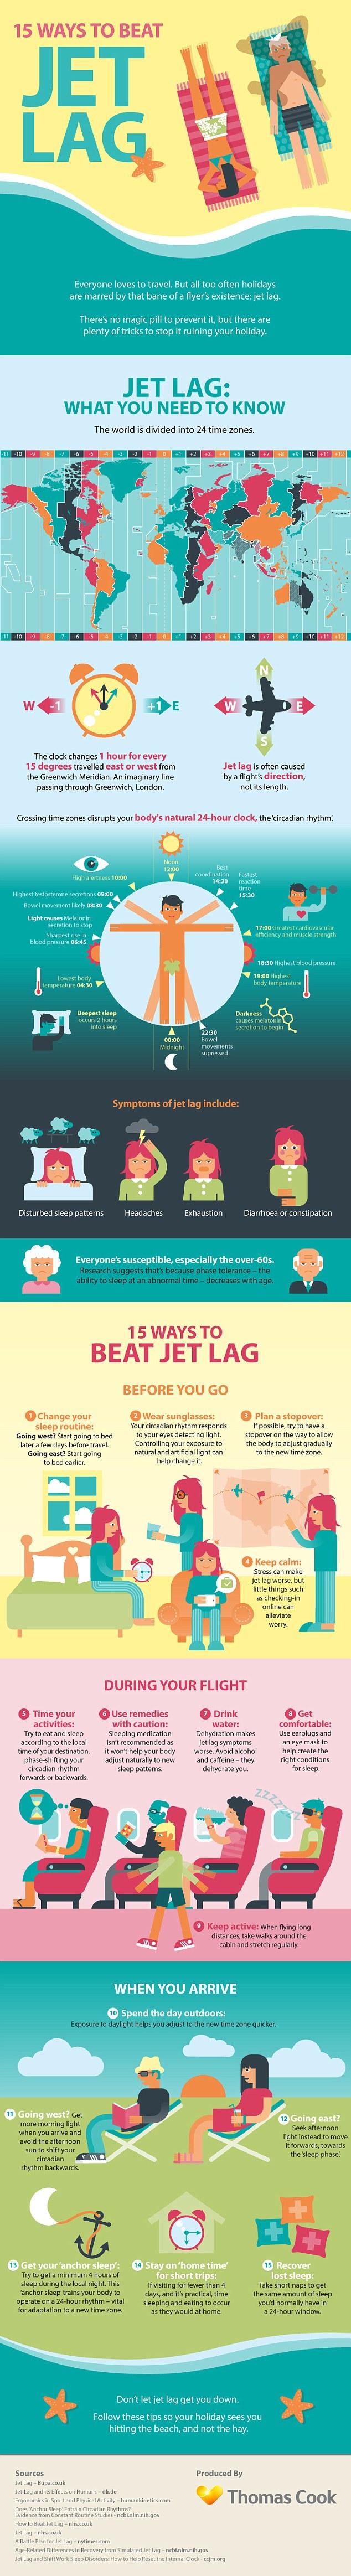 jet lag travel infographic thomas cook hhwt